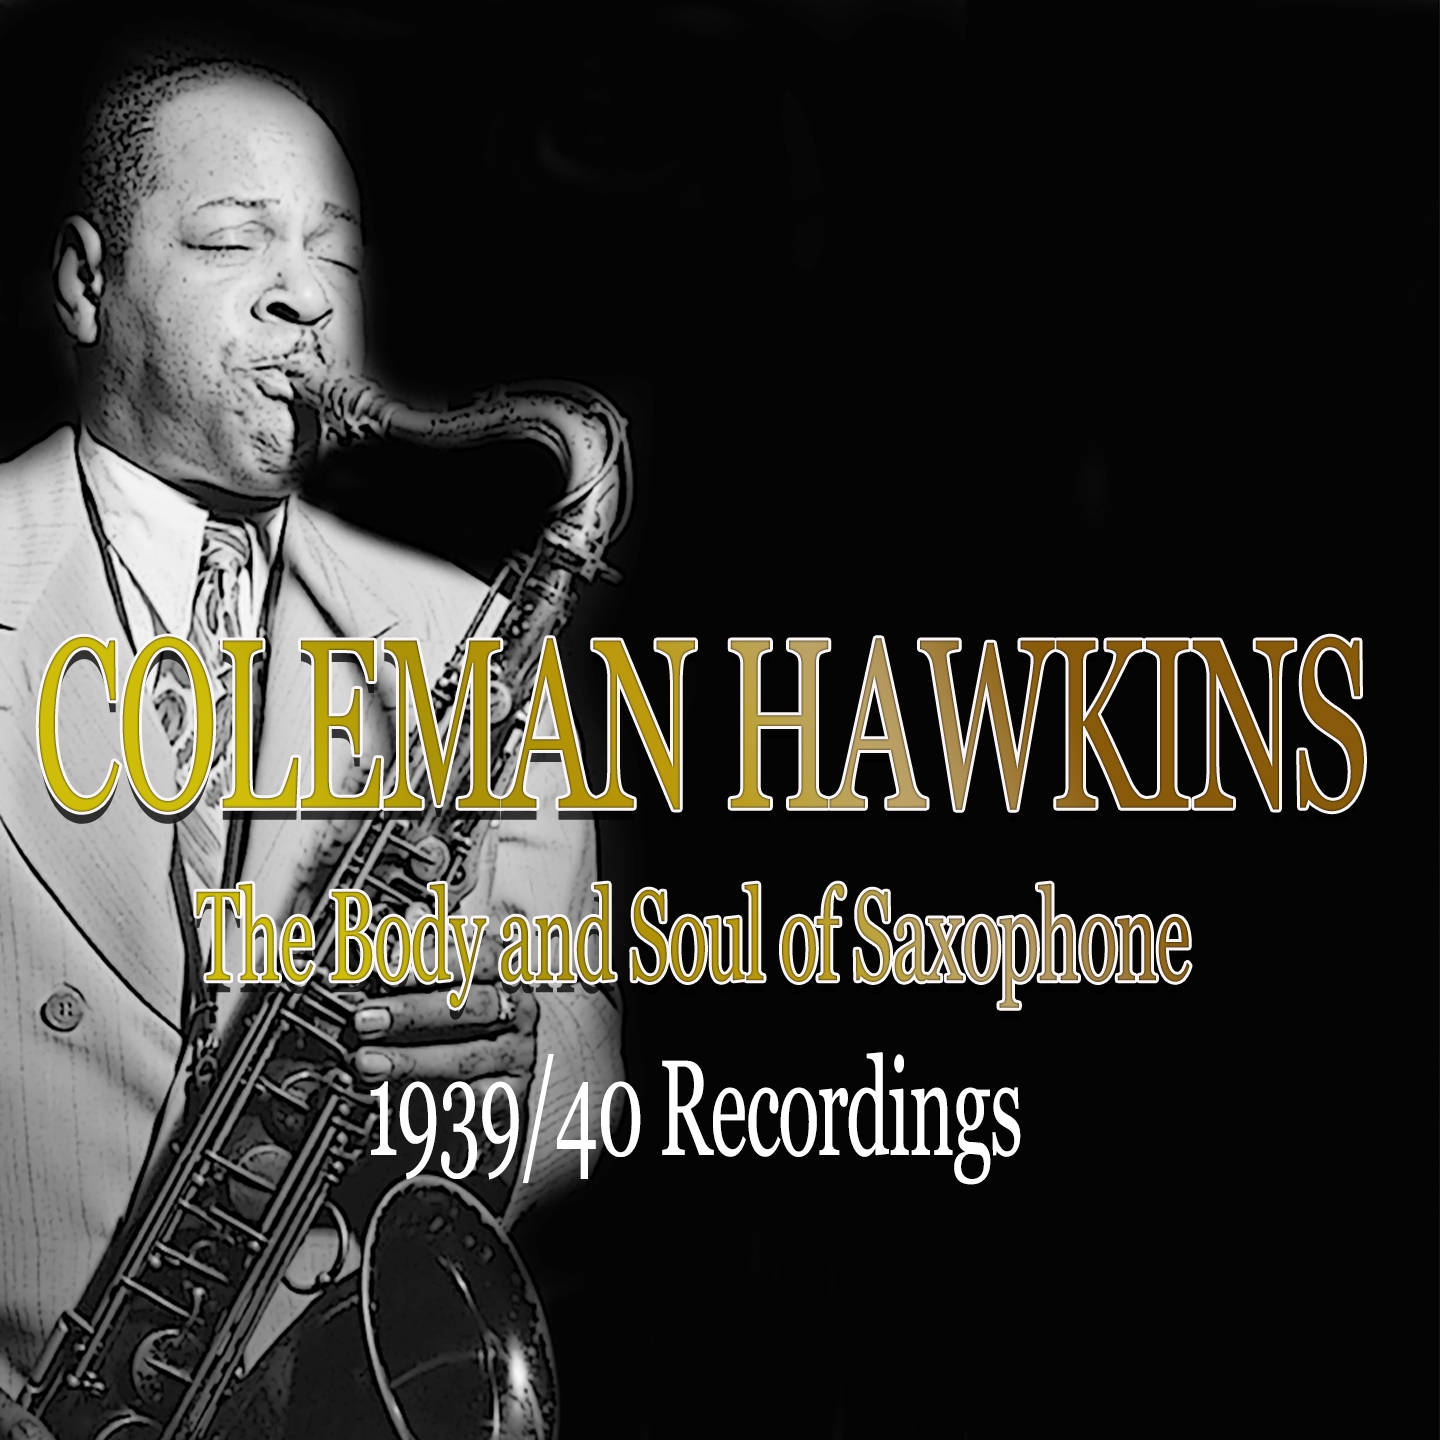 Coleman Hawkins 1939 Recording Album Wallpaper